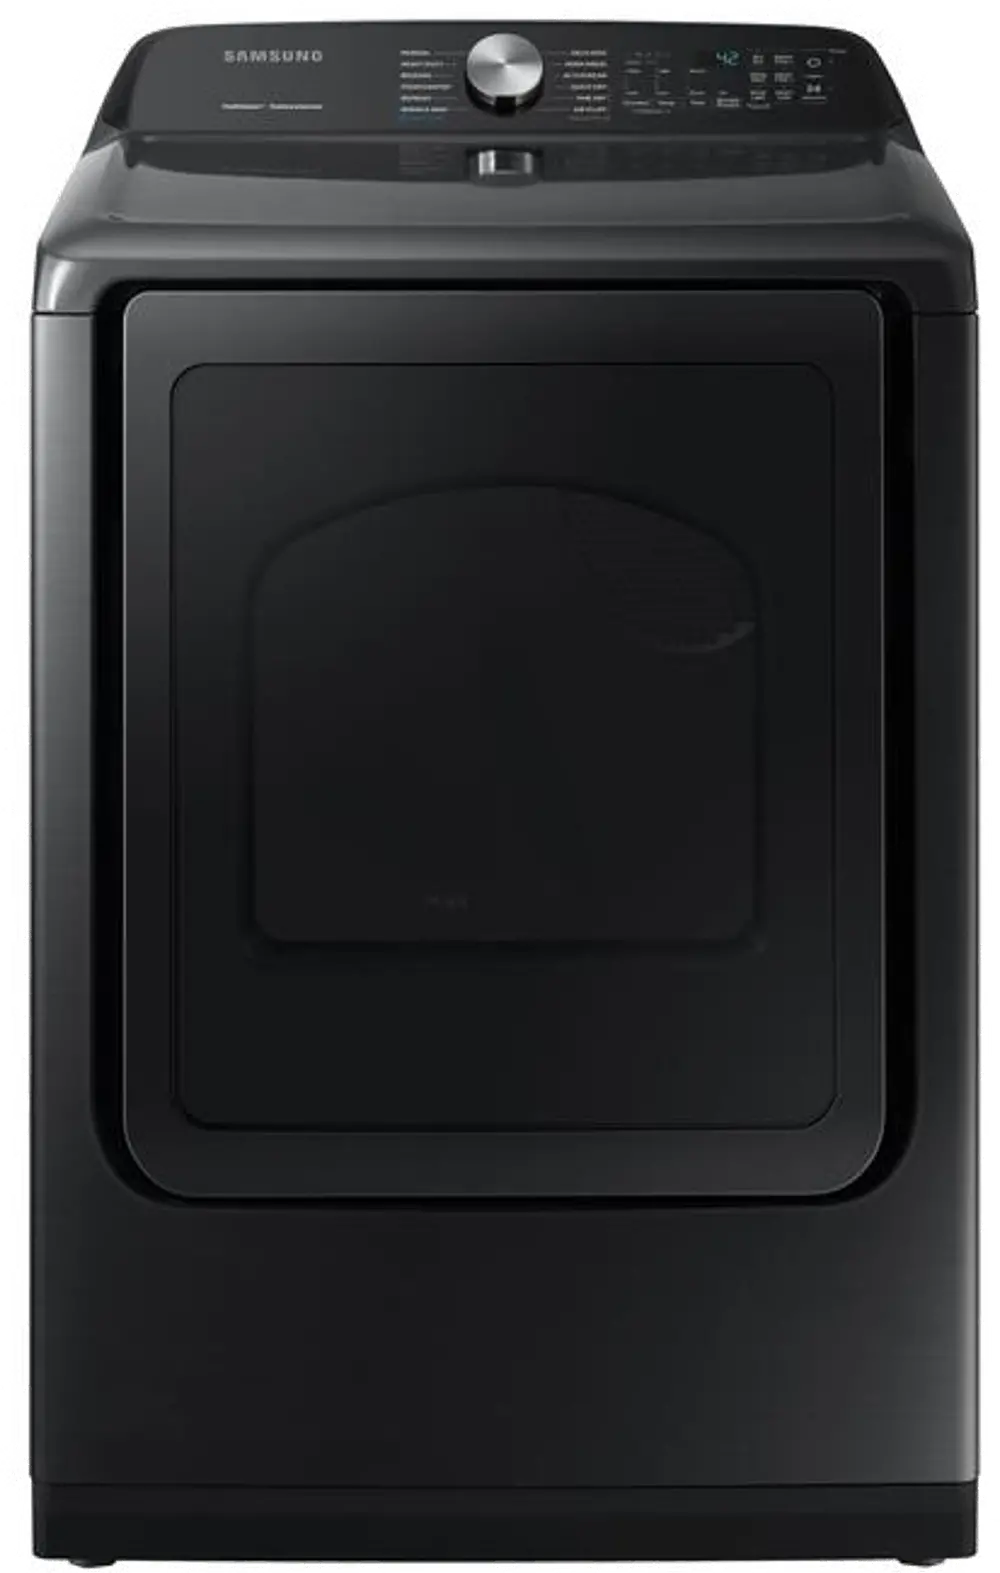 DVG50R5400V Samsung Steam Sanitize+ Gas Dryer - 7.4 cu. ft.-1